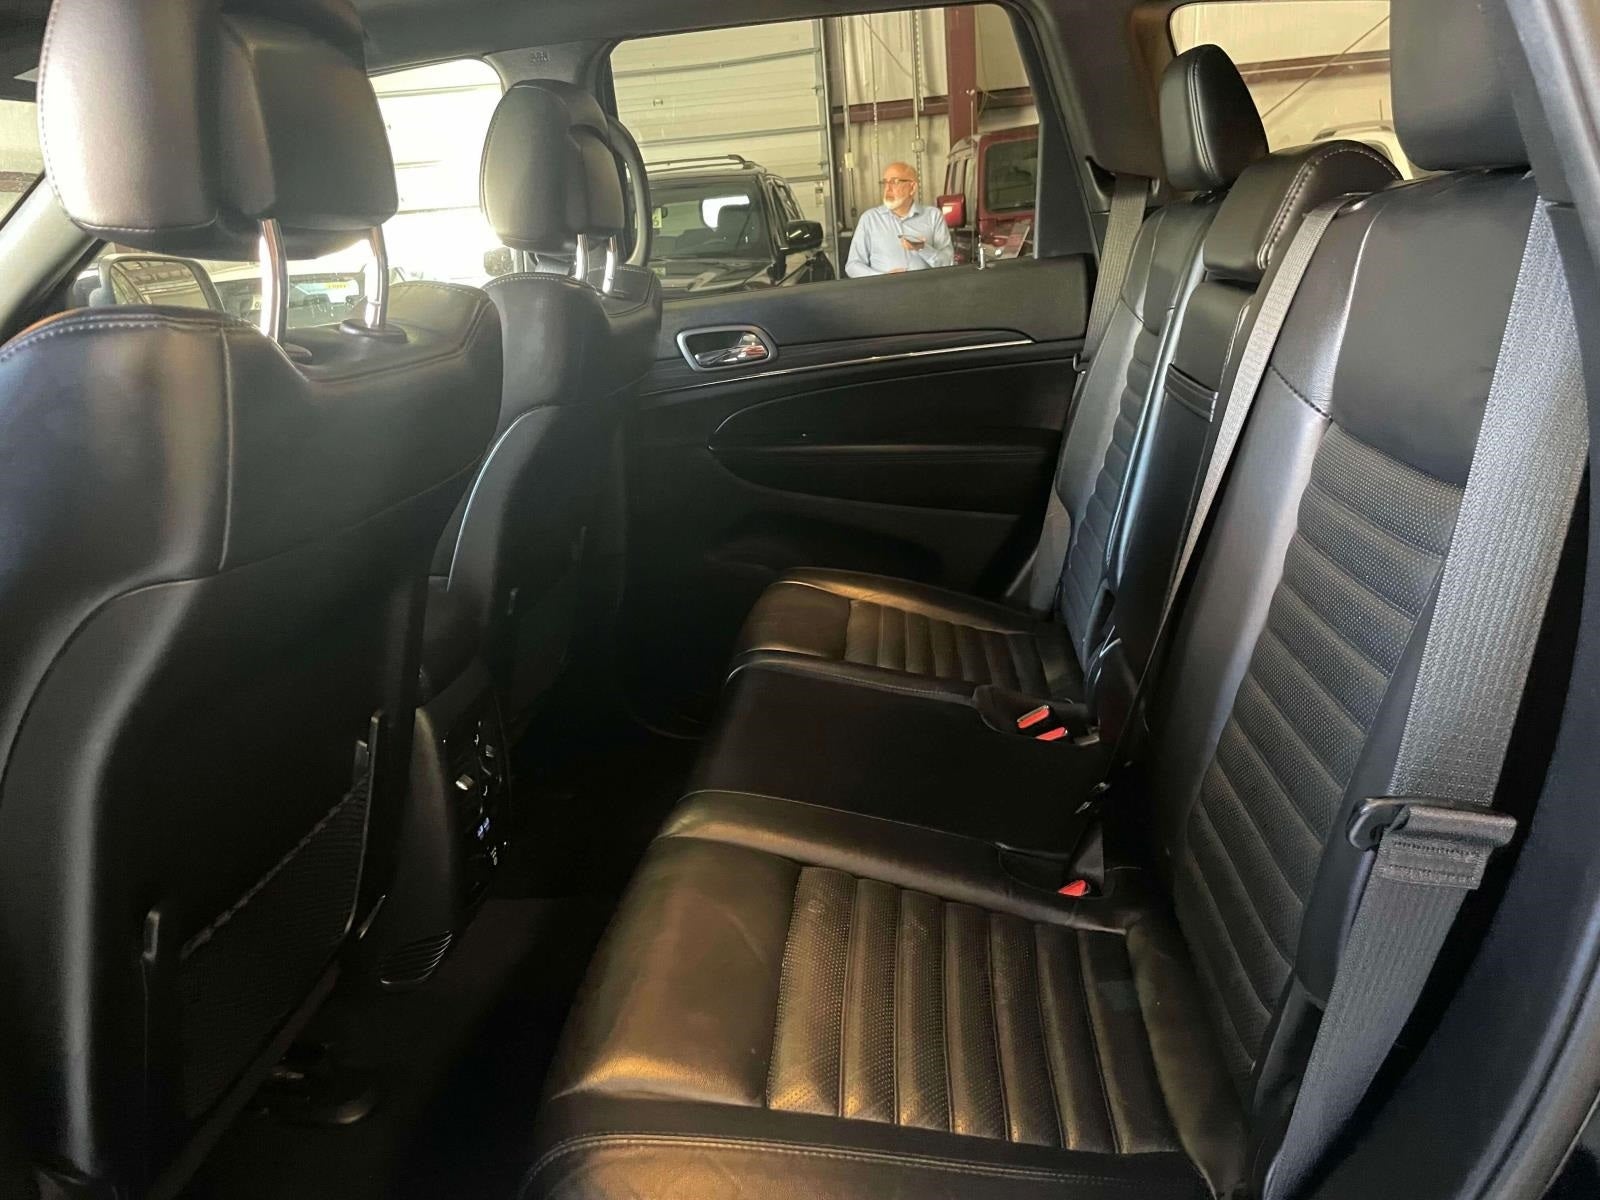 2019 Jeep Grand Cherokee Limited X 4x4